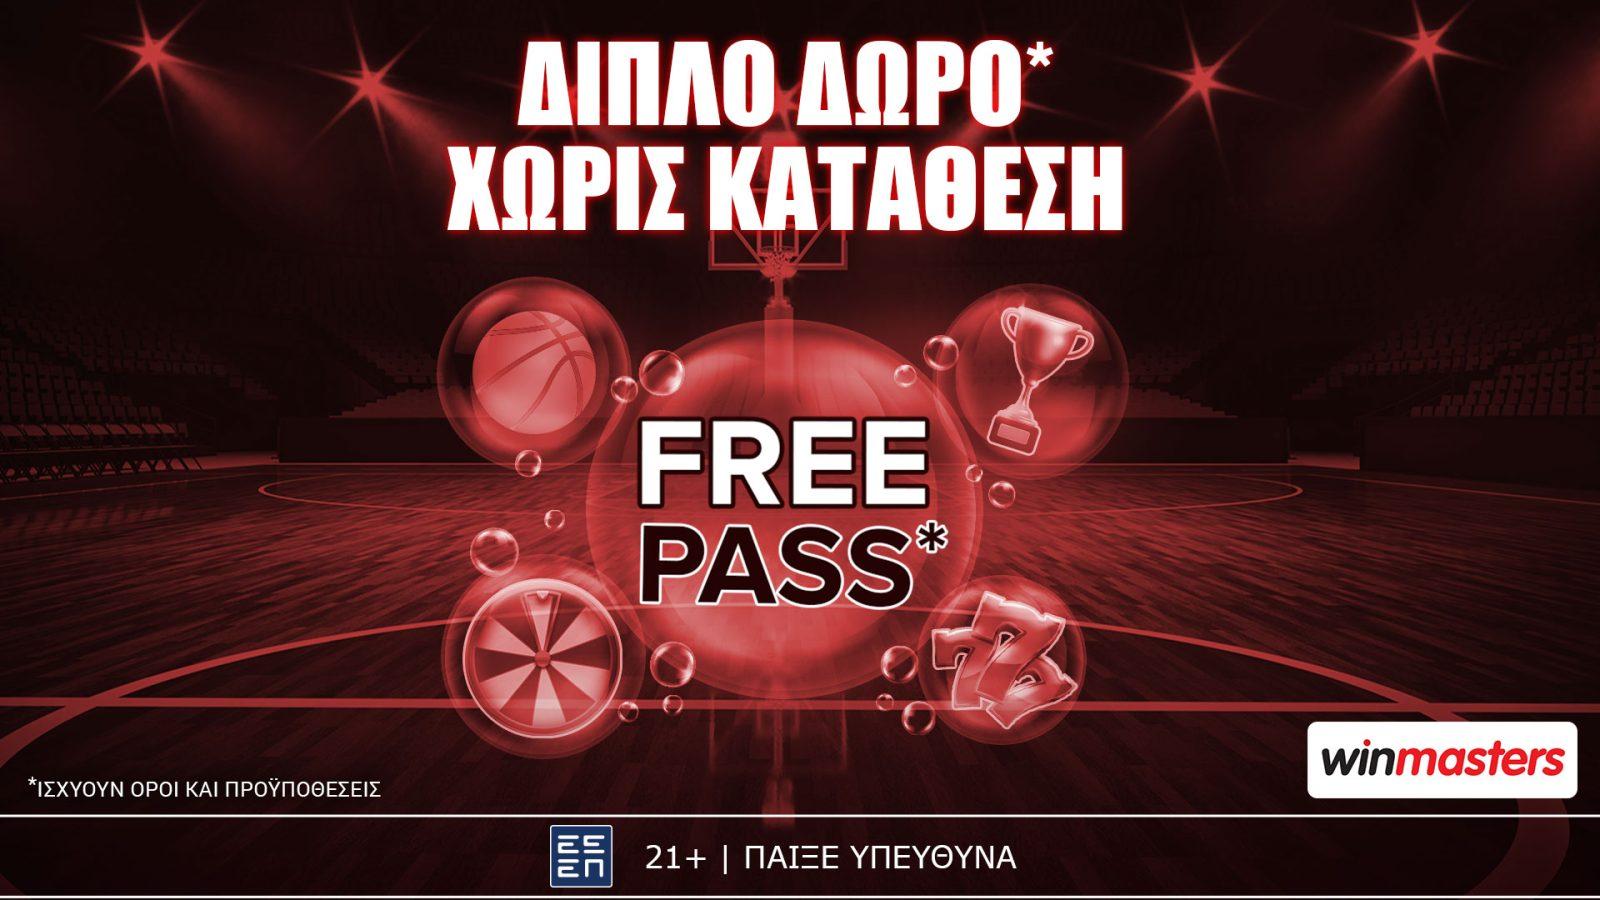 Winmasters: Παιχνίδι στο Mundobasket εντελώς δωρεάν* μεFree Pass